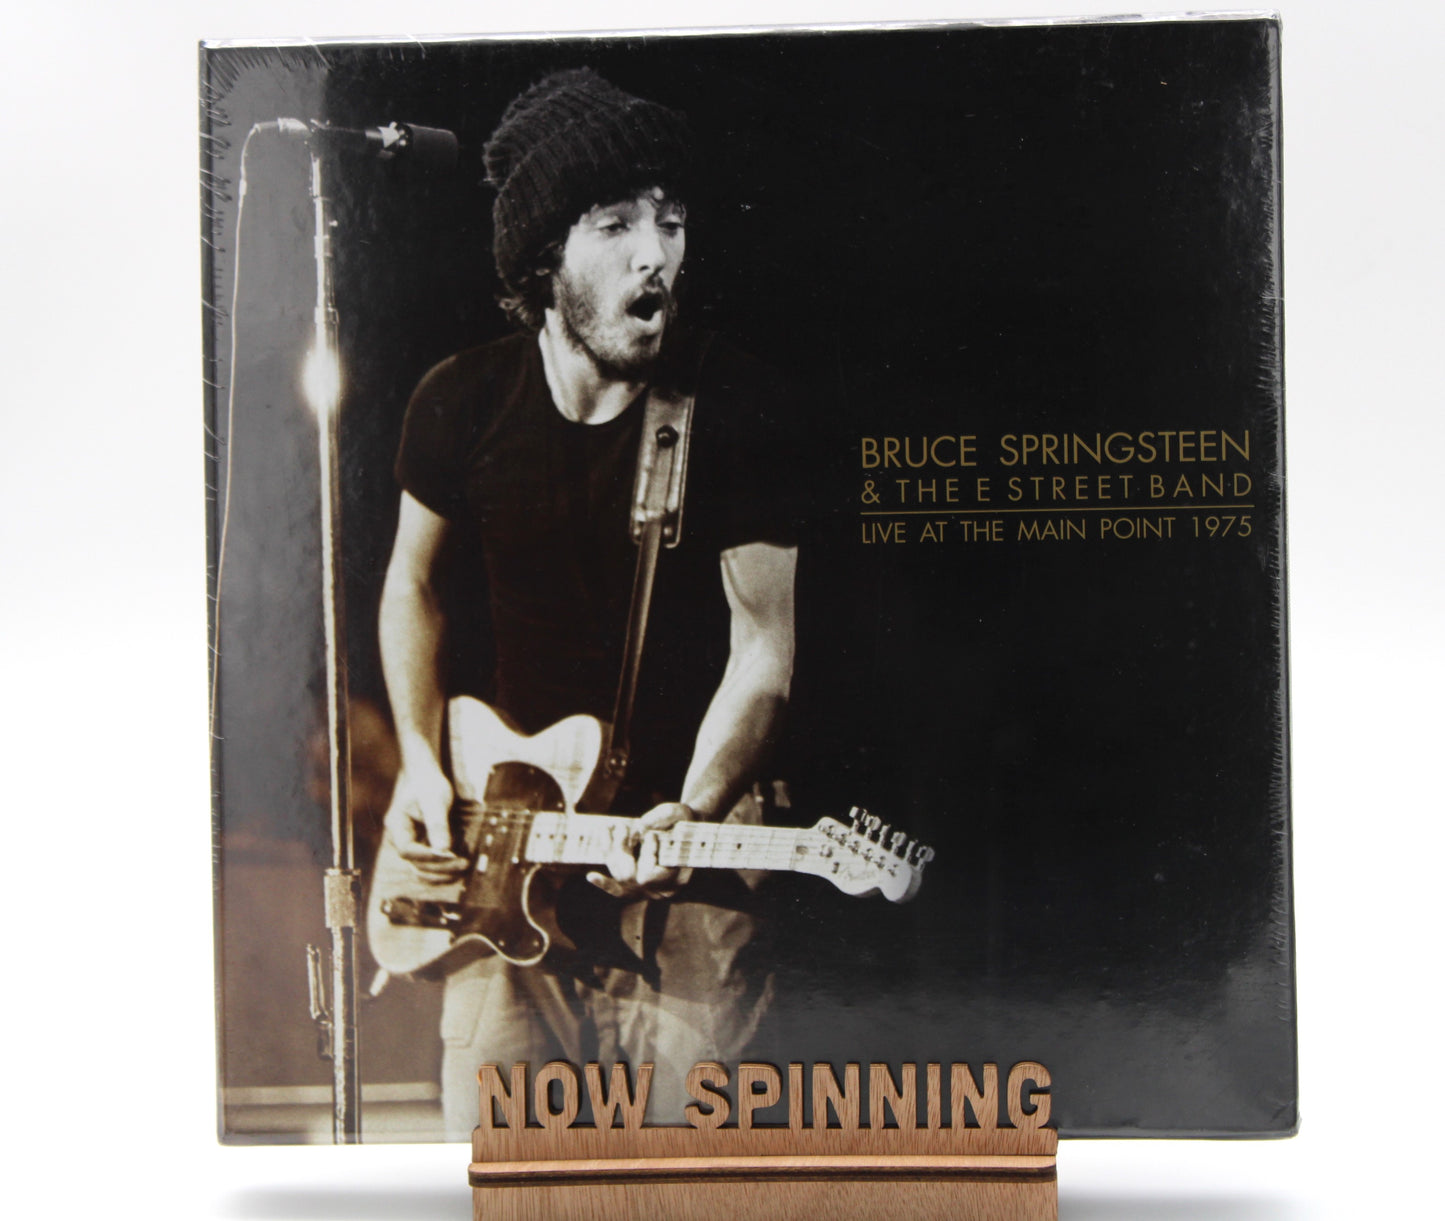 Bruce Springsteen SEALED Live At Main Point 1975 Byrn Mawr PA - 4 LPs Vinyl Box Set - Sealed BLV